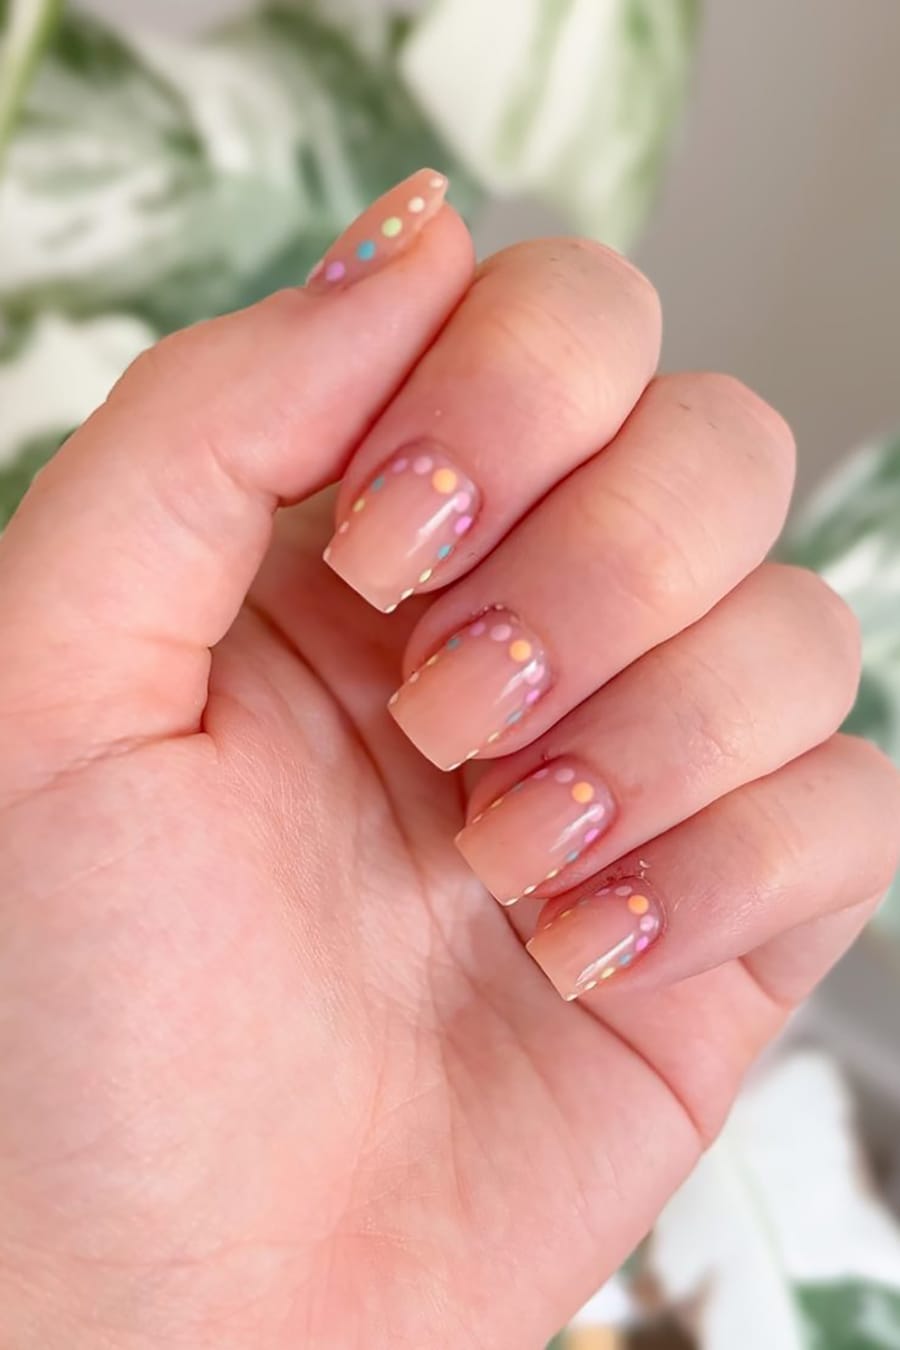 Color dot nails